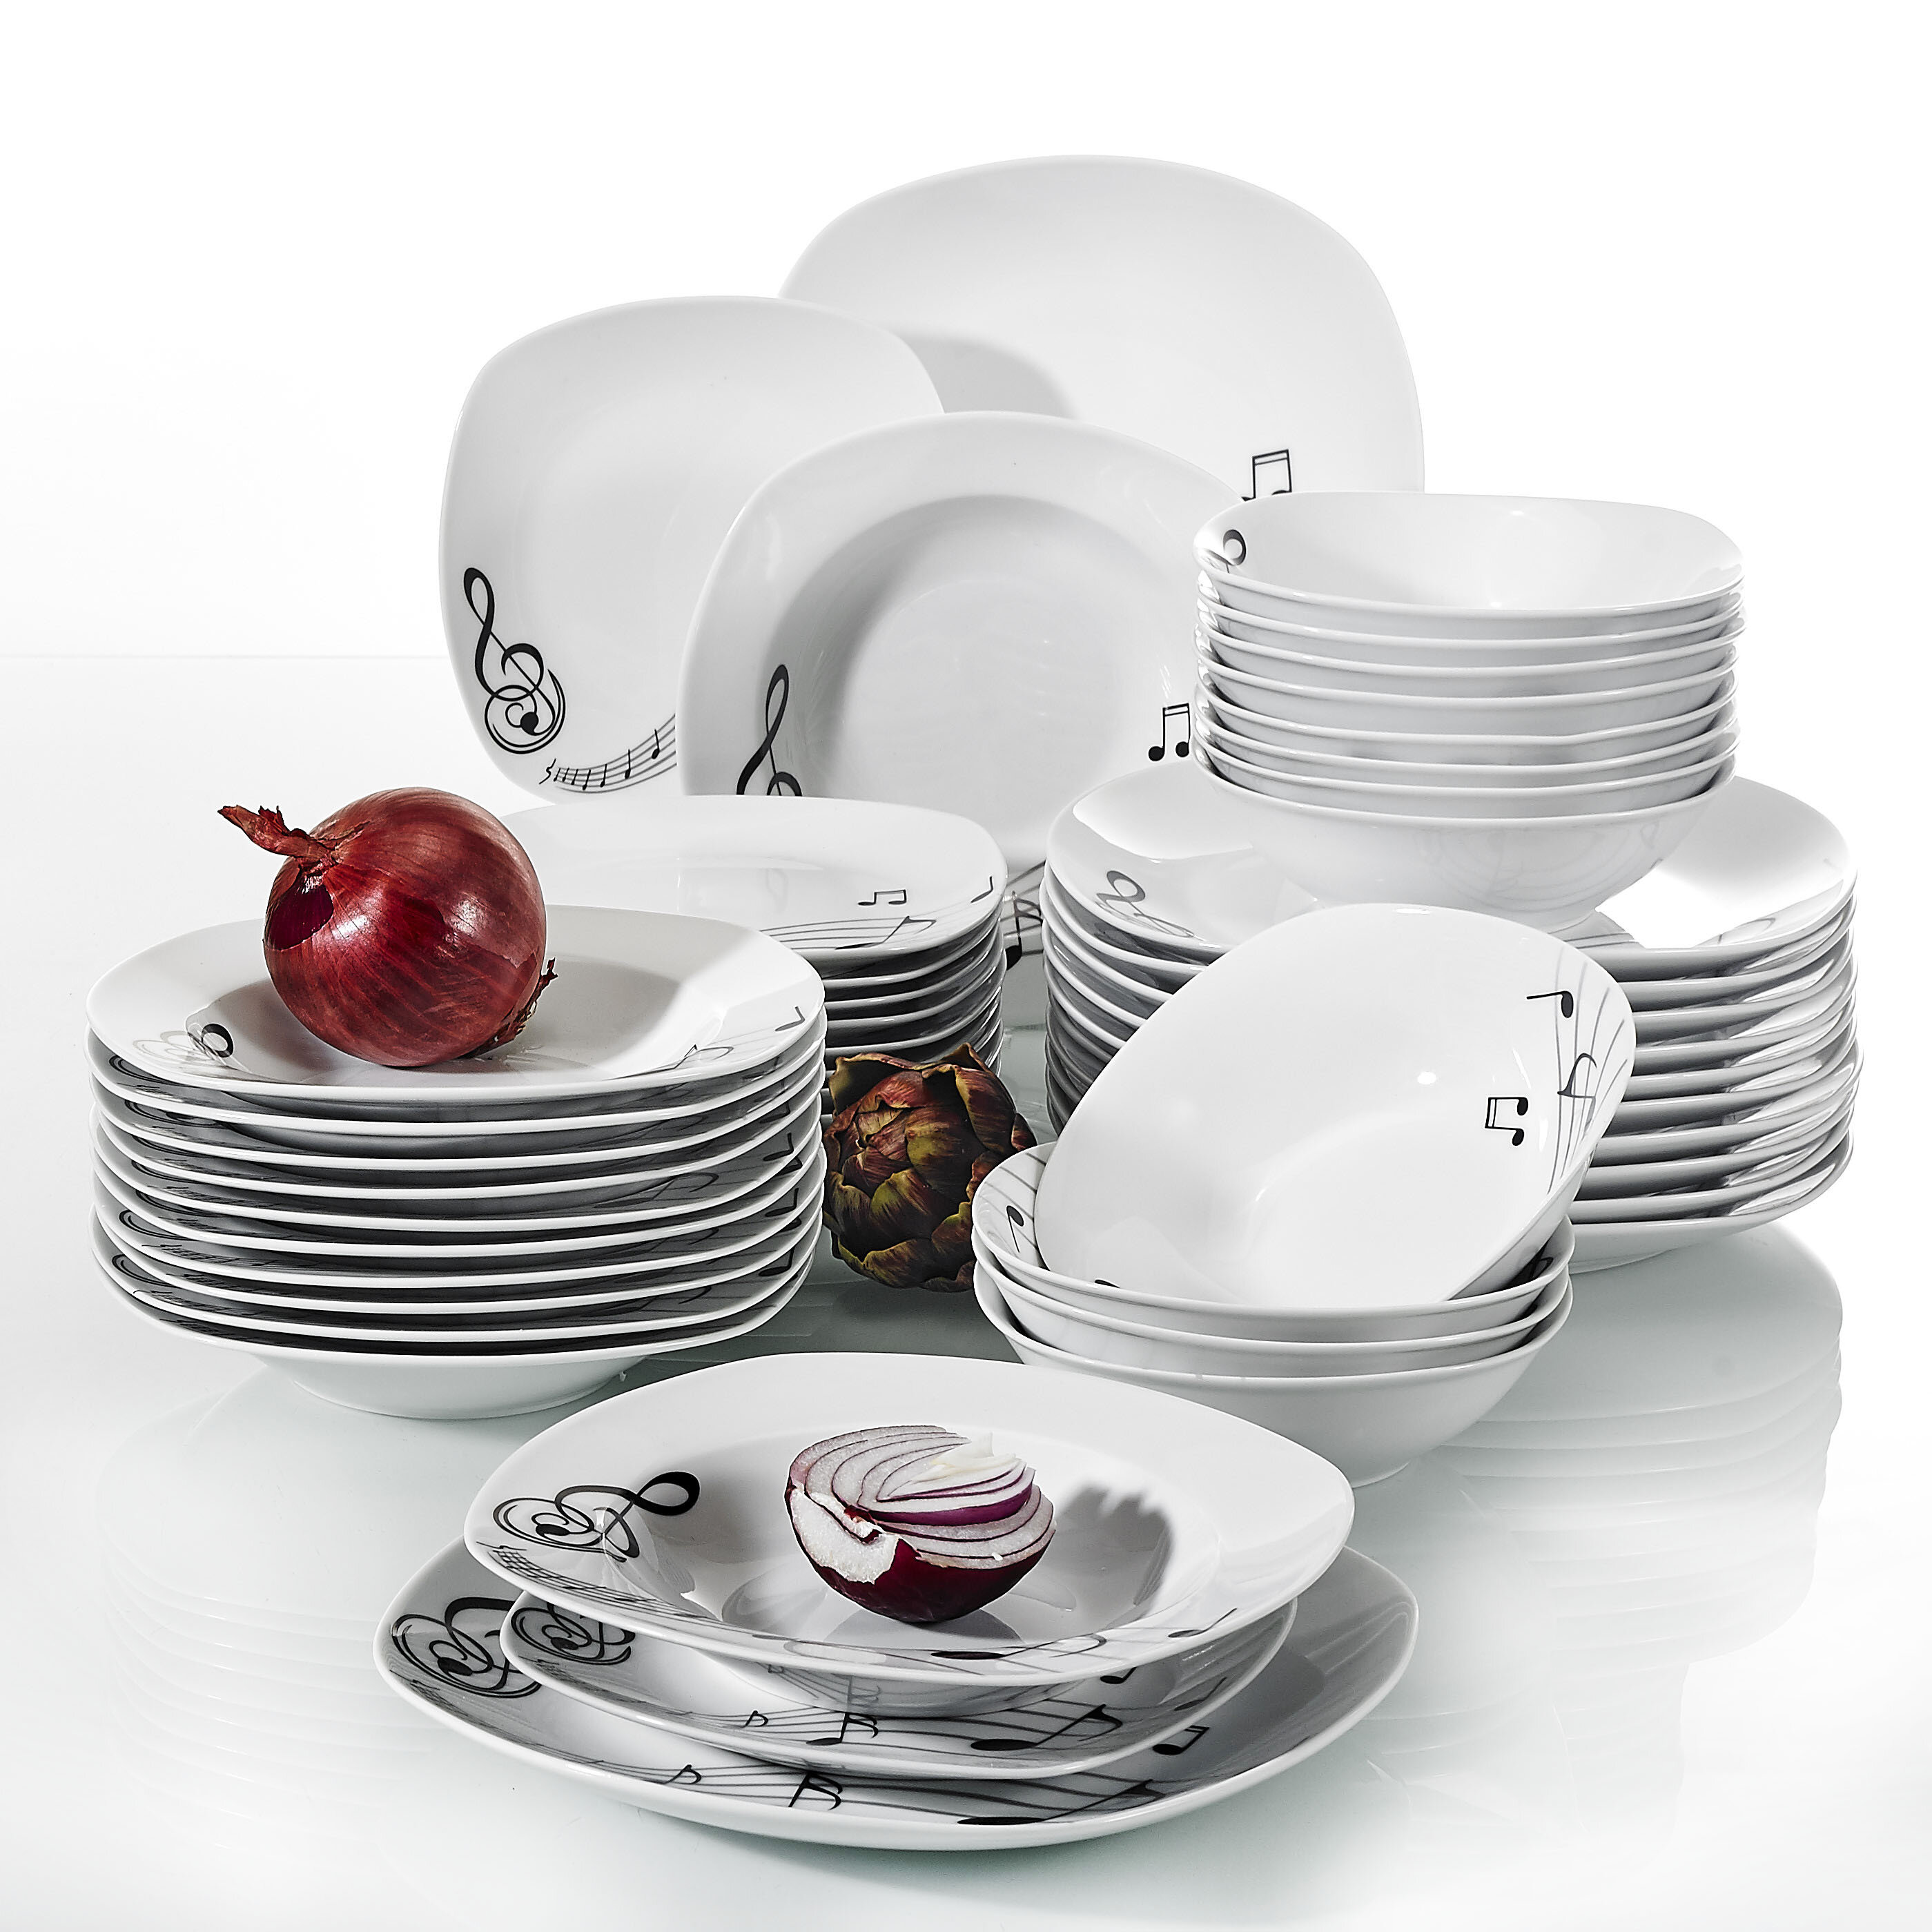 60 Piece Porcelain Complete Stoneware Dinner Combi Set Plates Bowls Cups Melody